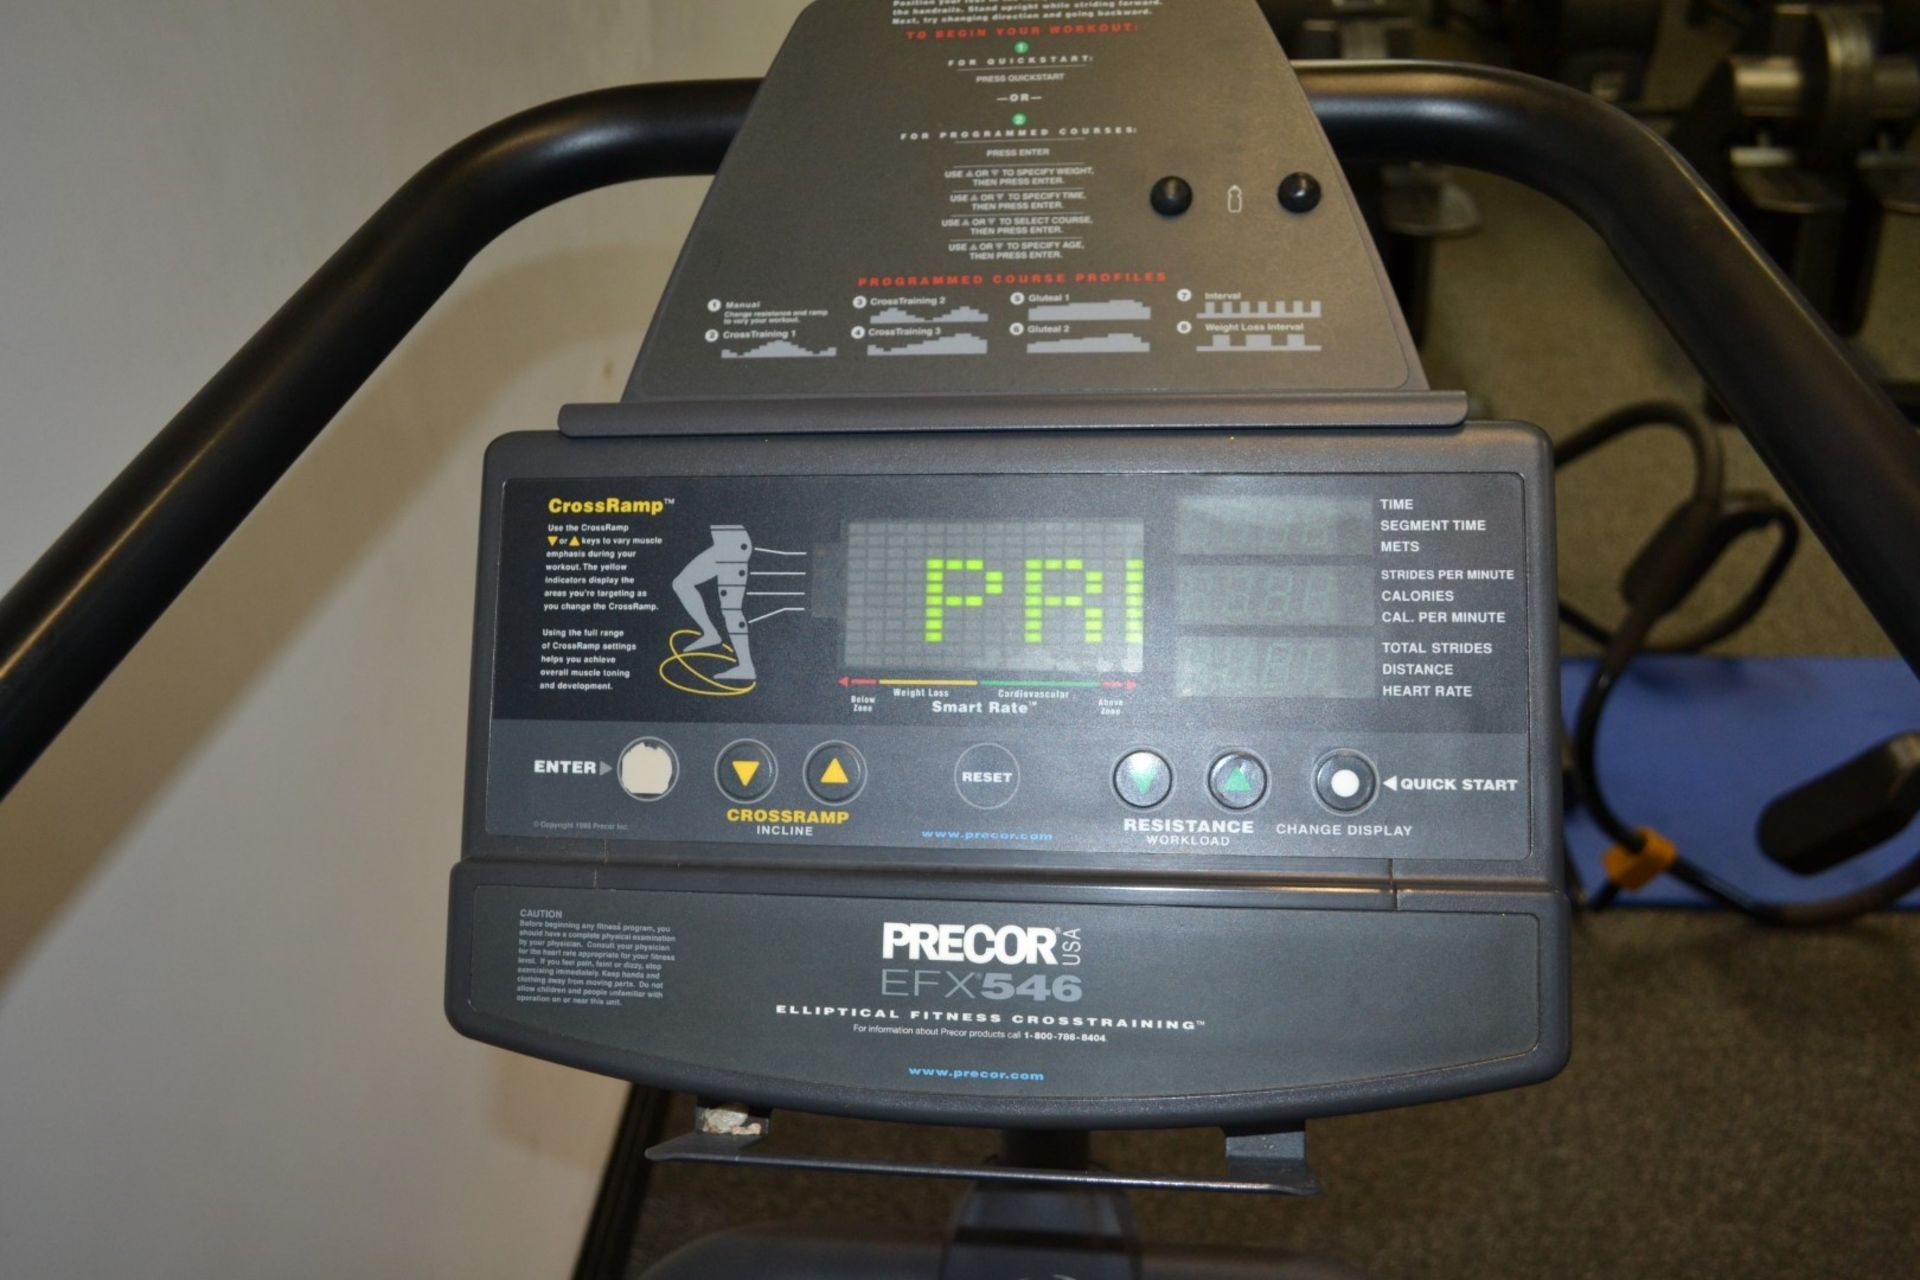 1 x Precor EFX 546 Cross-Trainer Gym Machine - Dimensions: L200 x W90 x H155cm - Ref: J2040/1FG - - Image 2 of 3